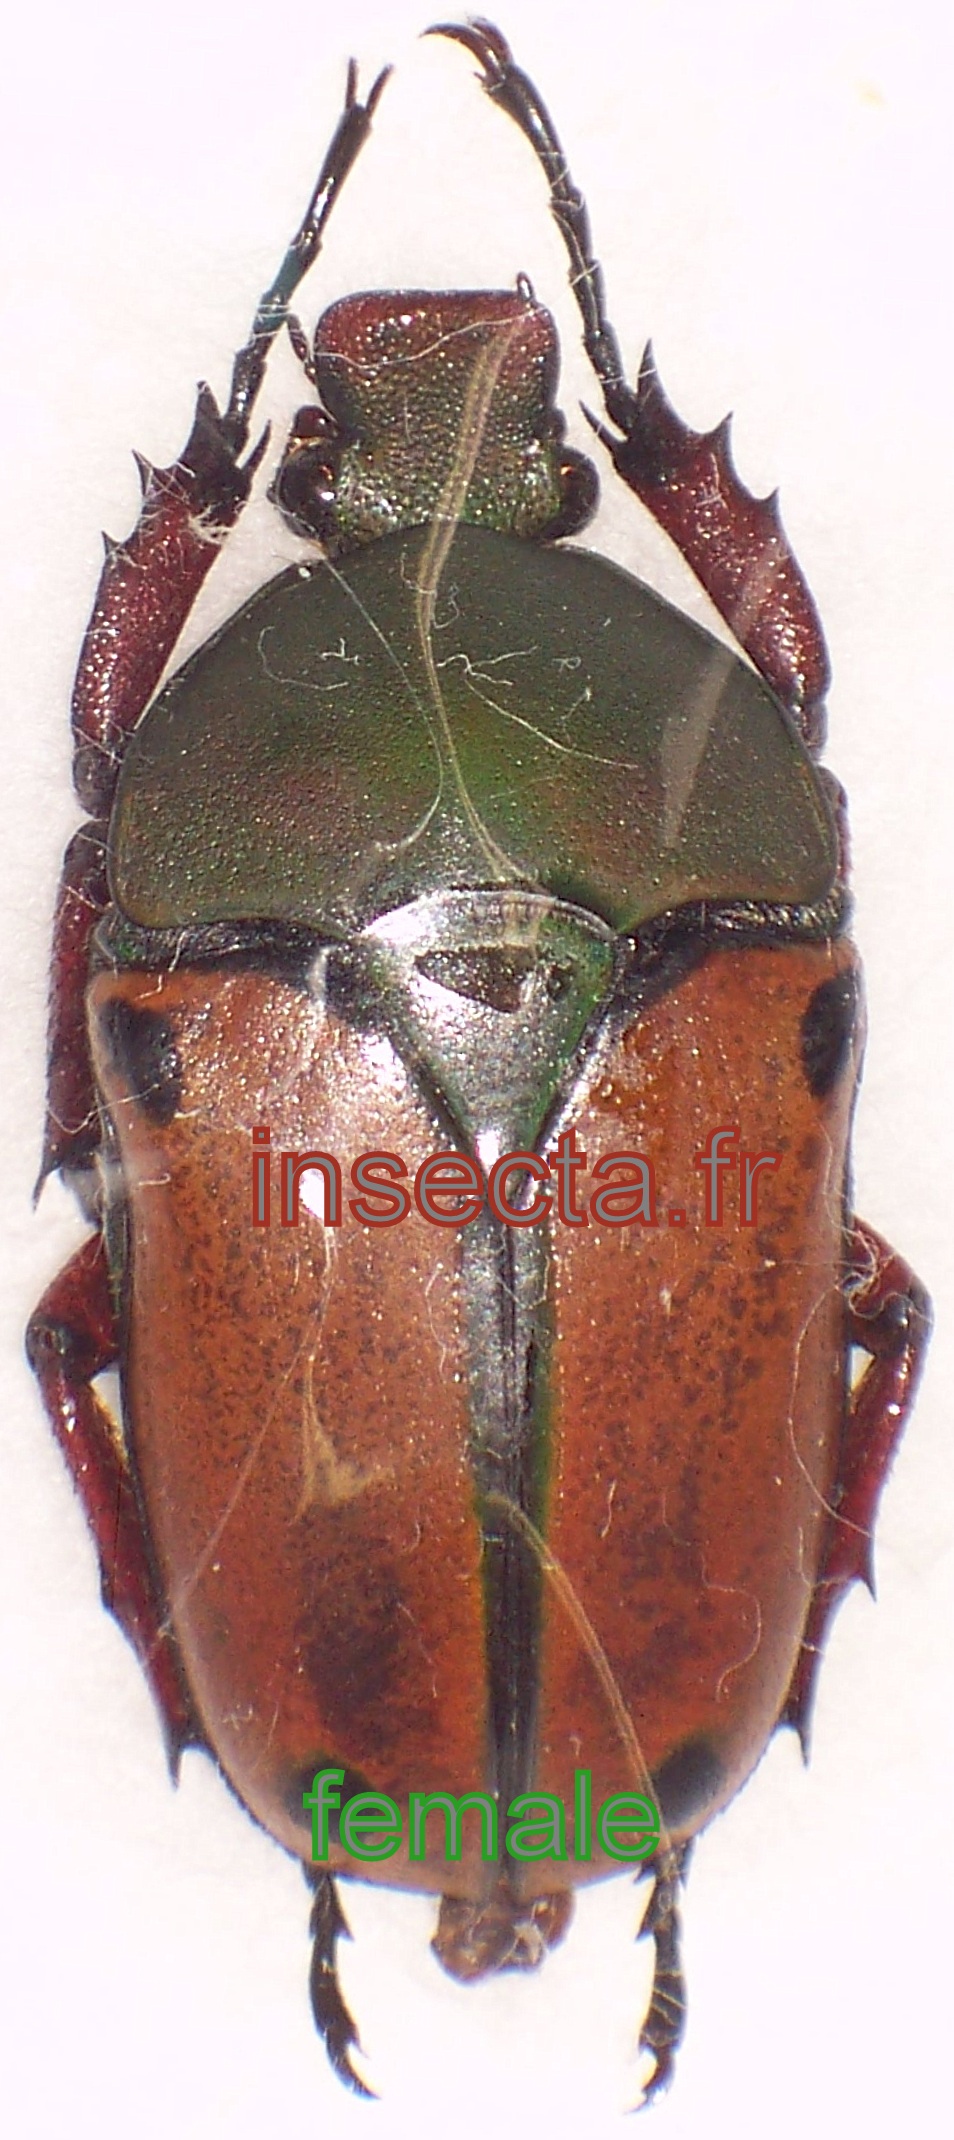 Coelorrhina (Cyprolais) loricata kiellandi femelle